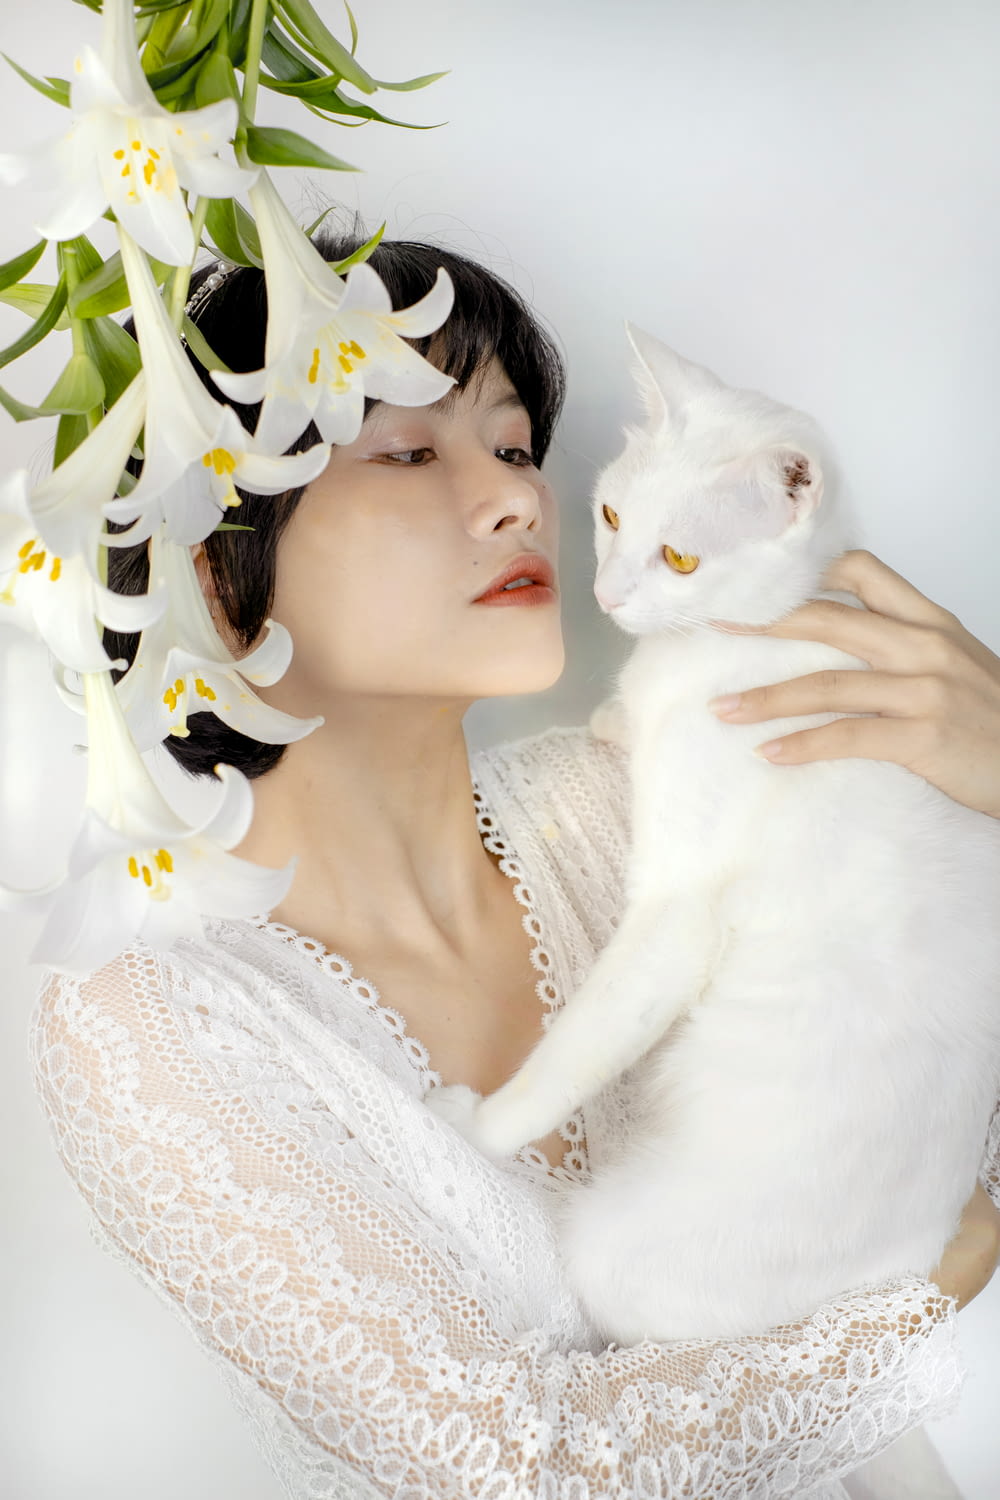 Una mujer con un vestido blanco sosteniendo un gato blanco